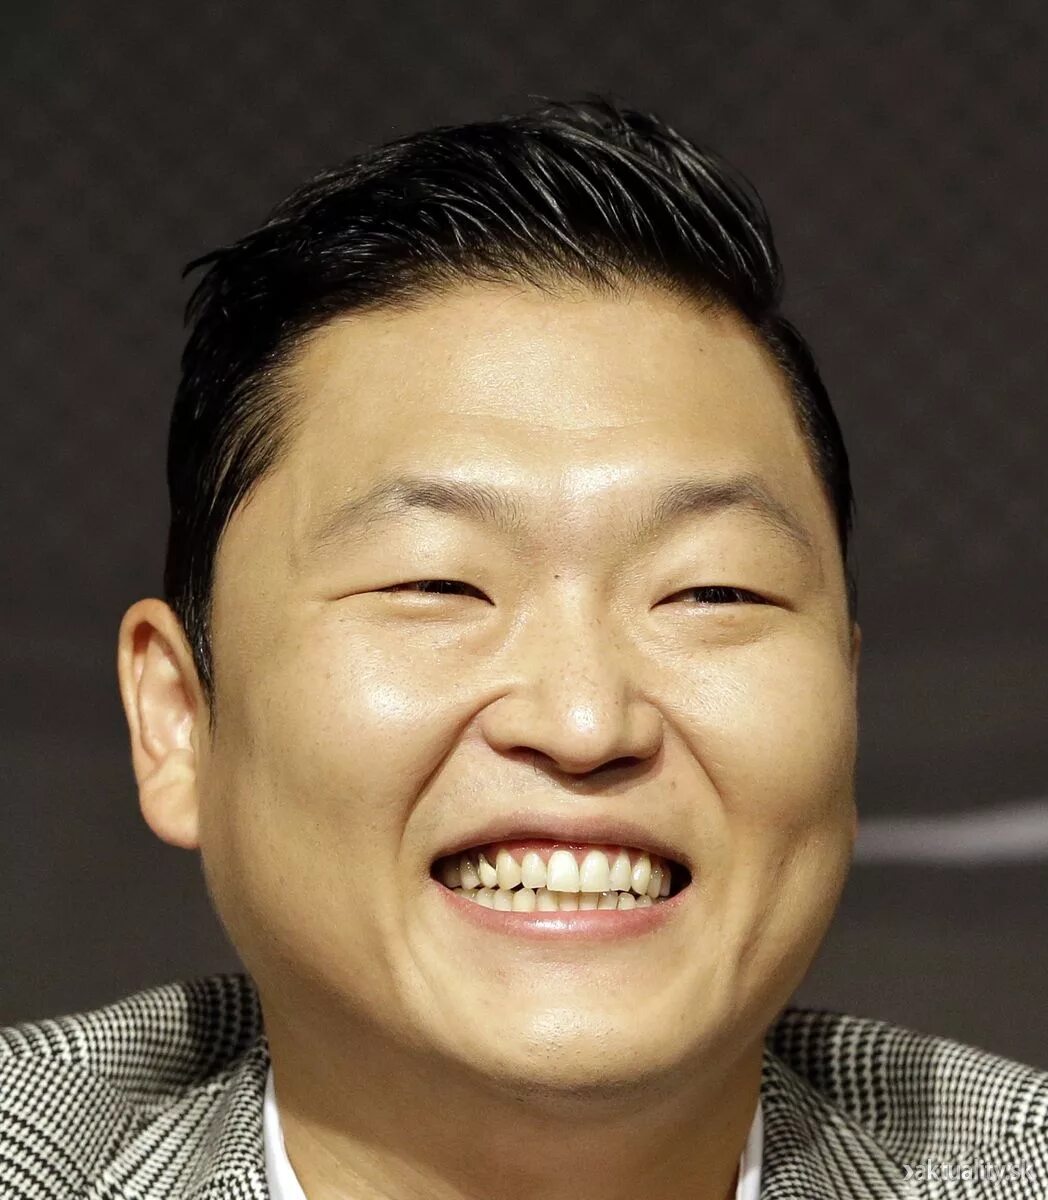 Sang com. Psy певец. Пак Чжэ Сан Psy. Psy 2020 певец. Парк Дже Санг певец.